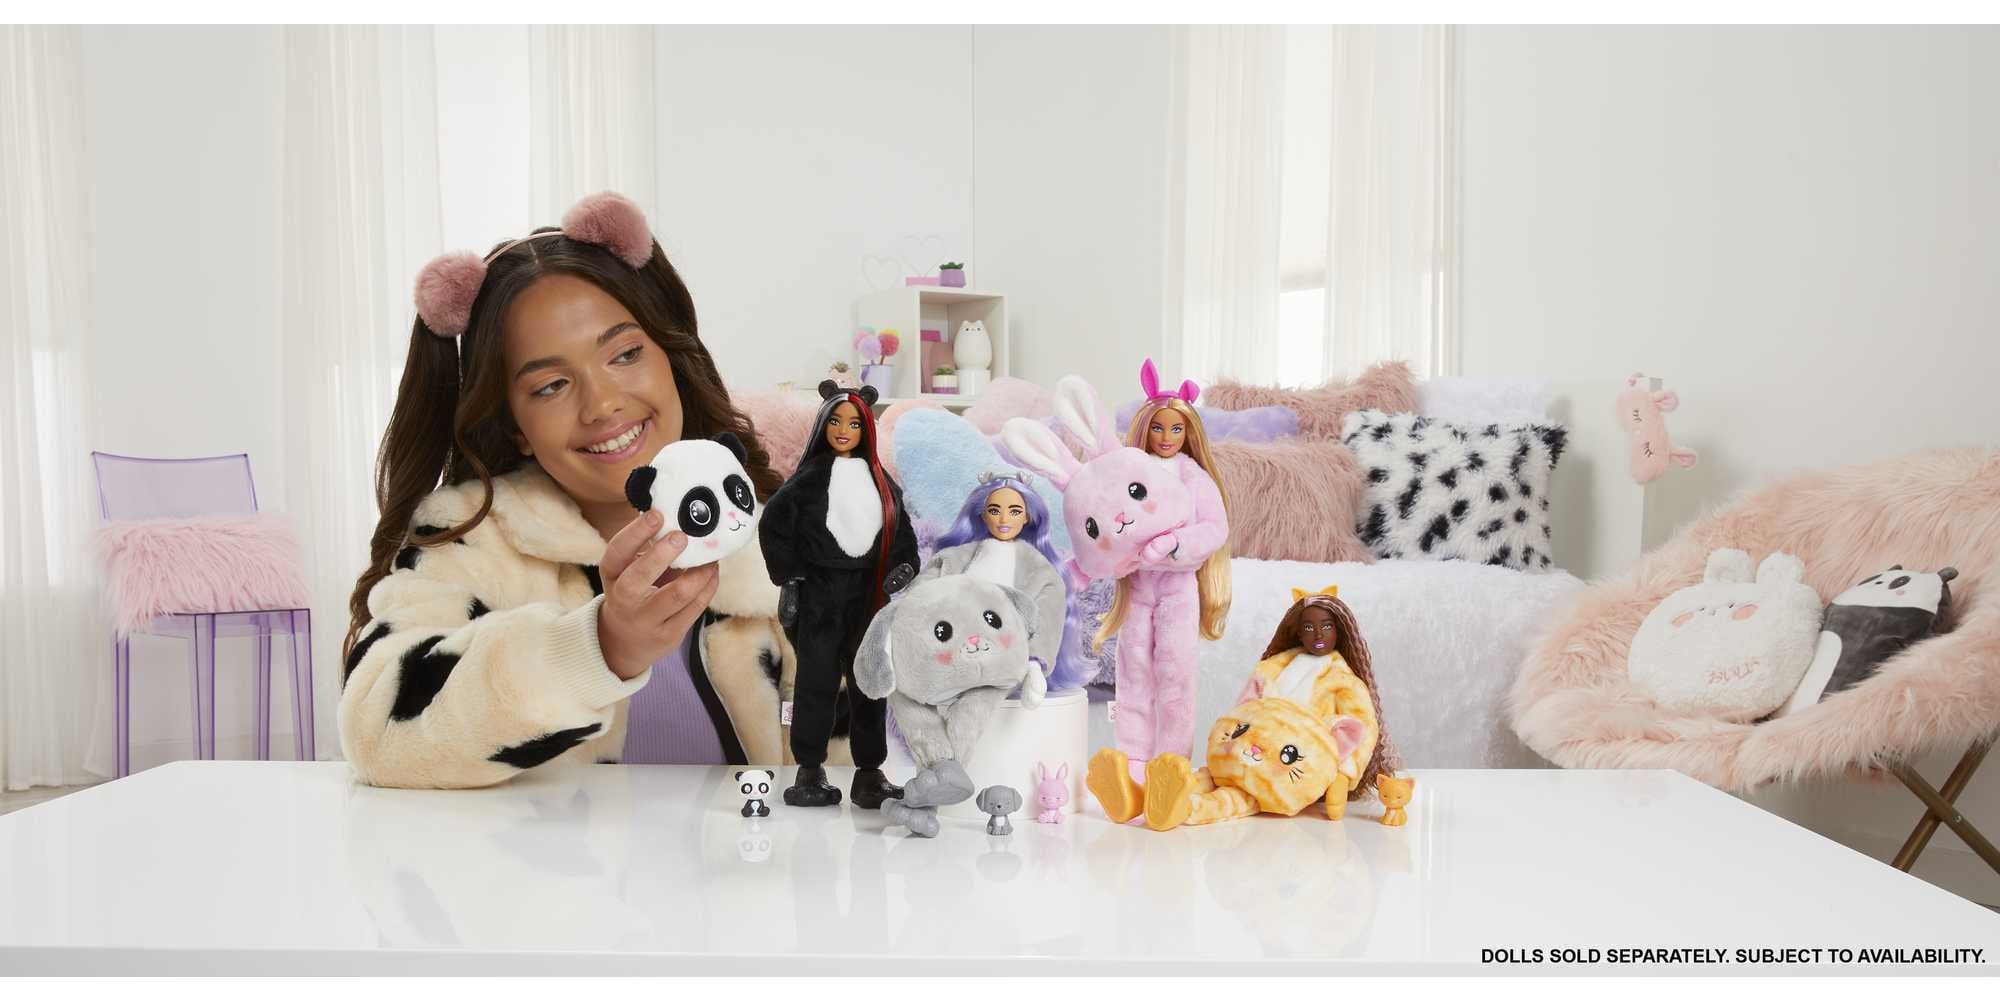 Barbie Cutie Reveal Doll with Bunny Plush Costume & 10 Surprises Including  Mini Pet, 1 ct - Harris Teeter